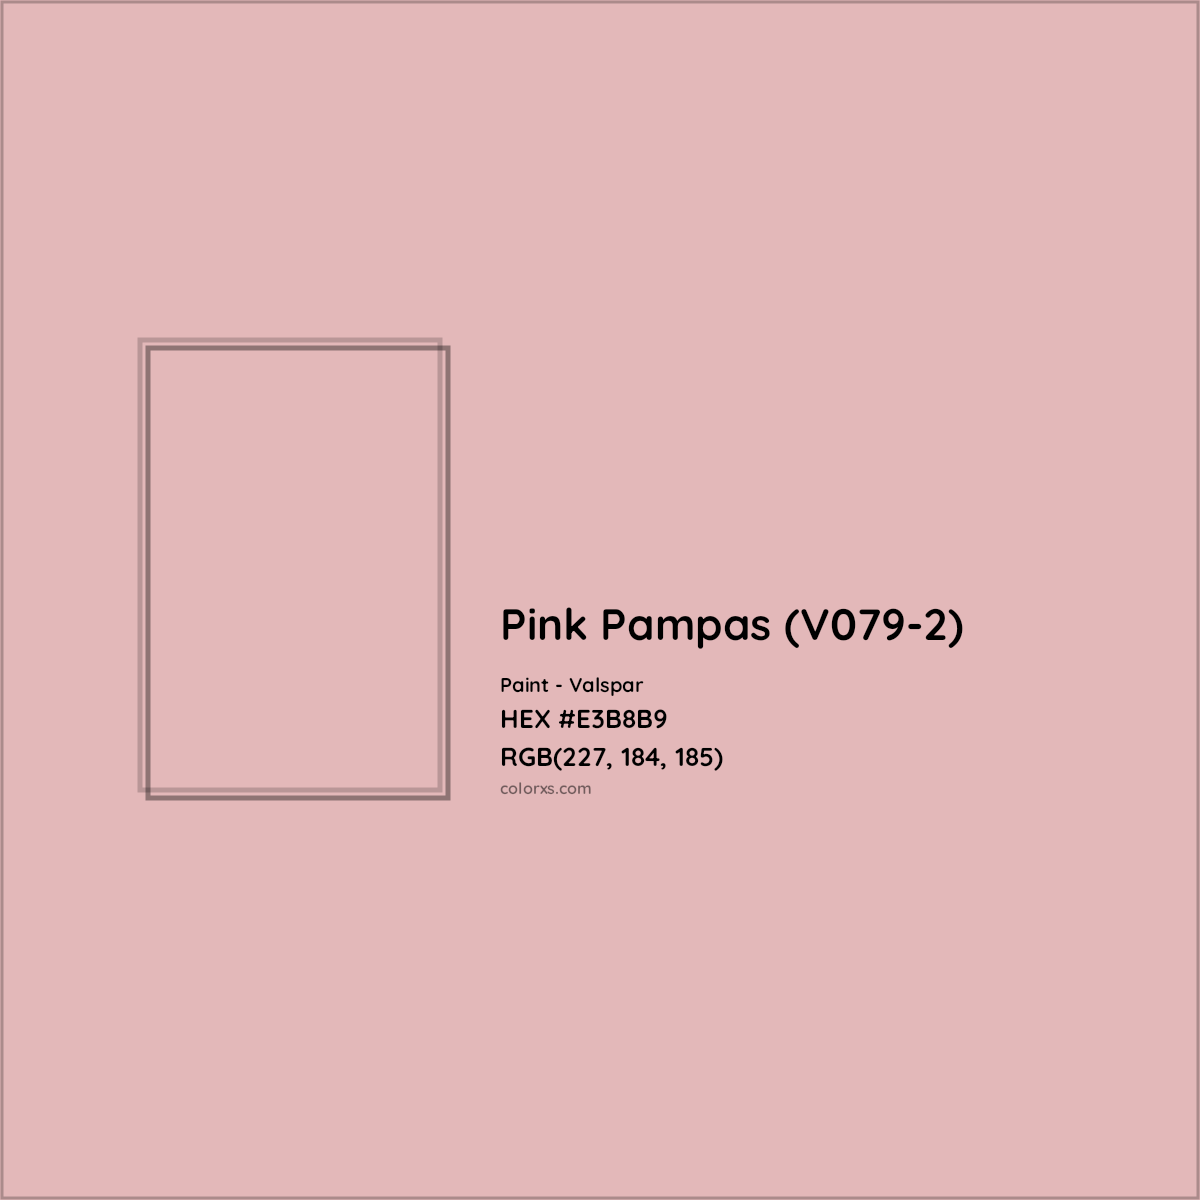 HEX #E3B8B9 Pink Pampas (V079-2) Paint Valspar - Color Code